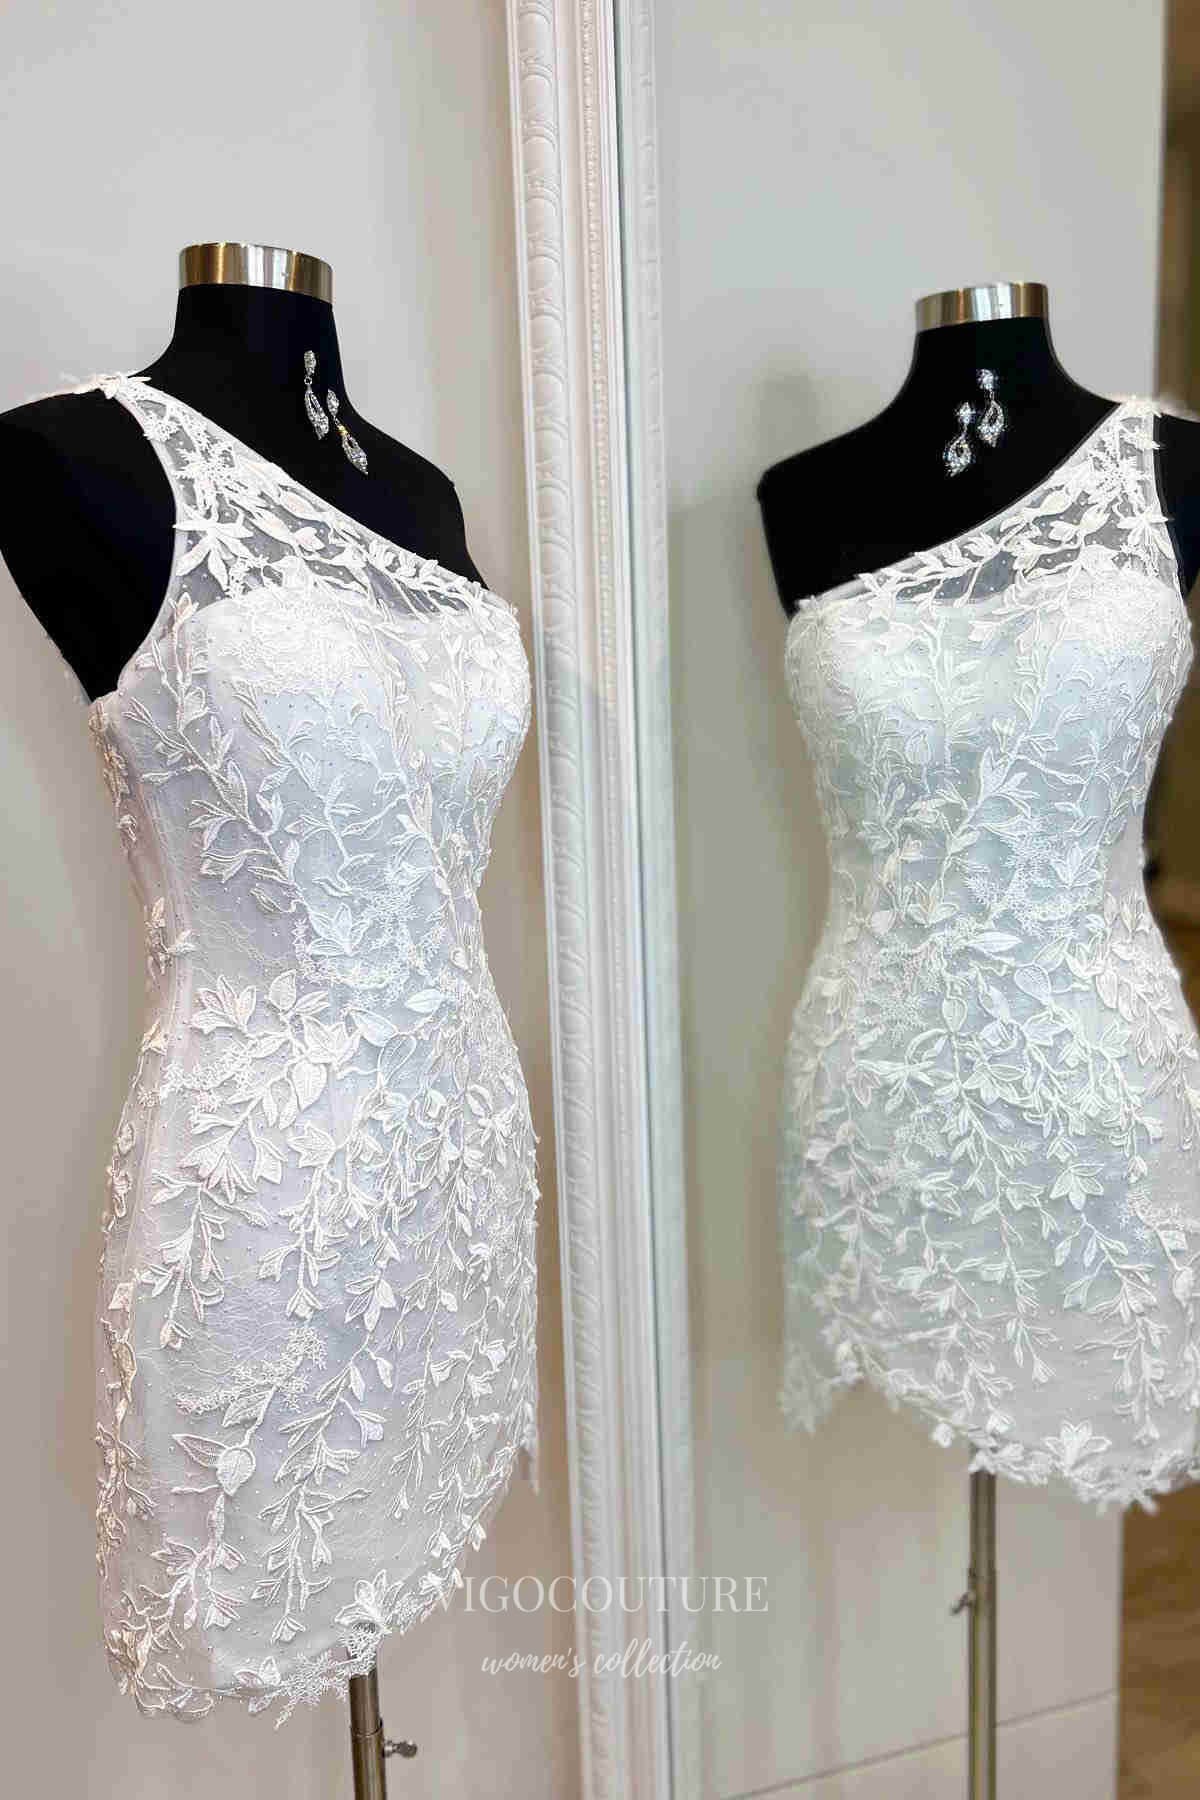 Stunning Lace Applique Hoco Dress One Shoulder Bodycon Dress hc262-Prom Dresses-vigocouture-White-US0-vigocouture